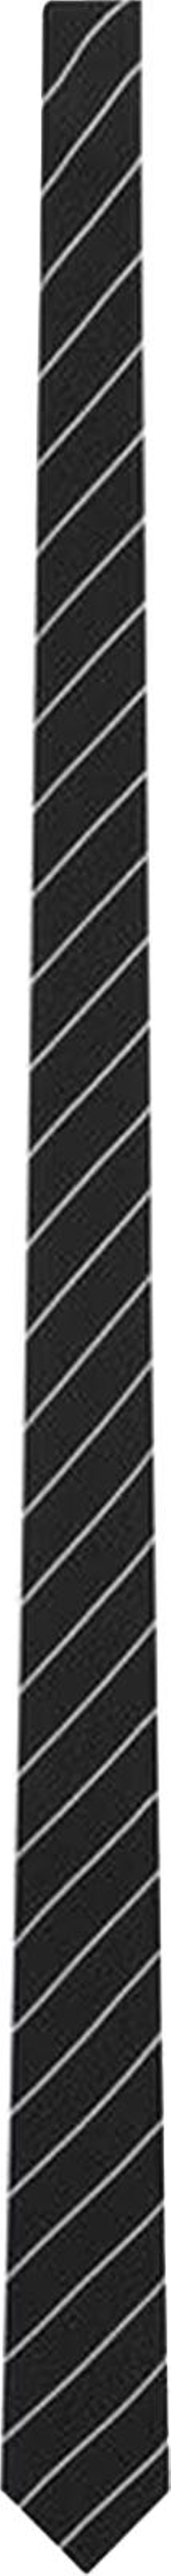 Saint Laurent Diagonal Stripe Print Tie 'Black/Medium Grey'